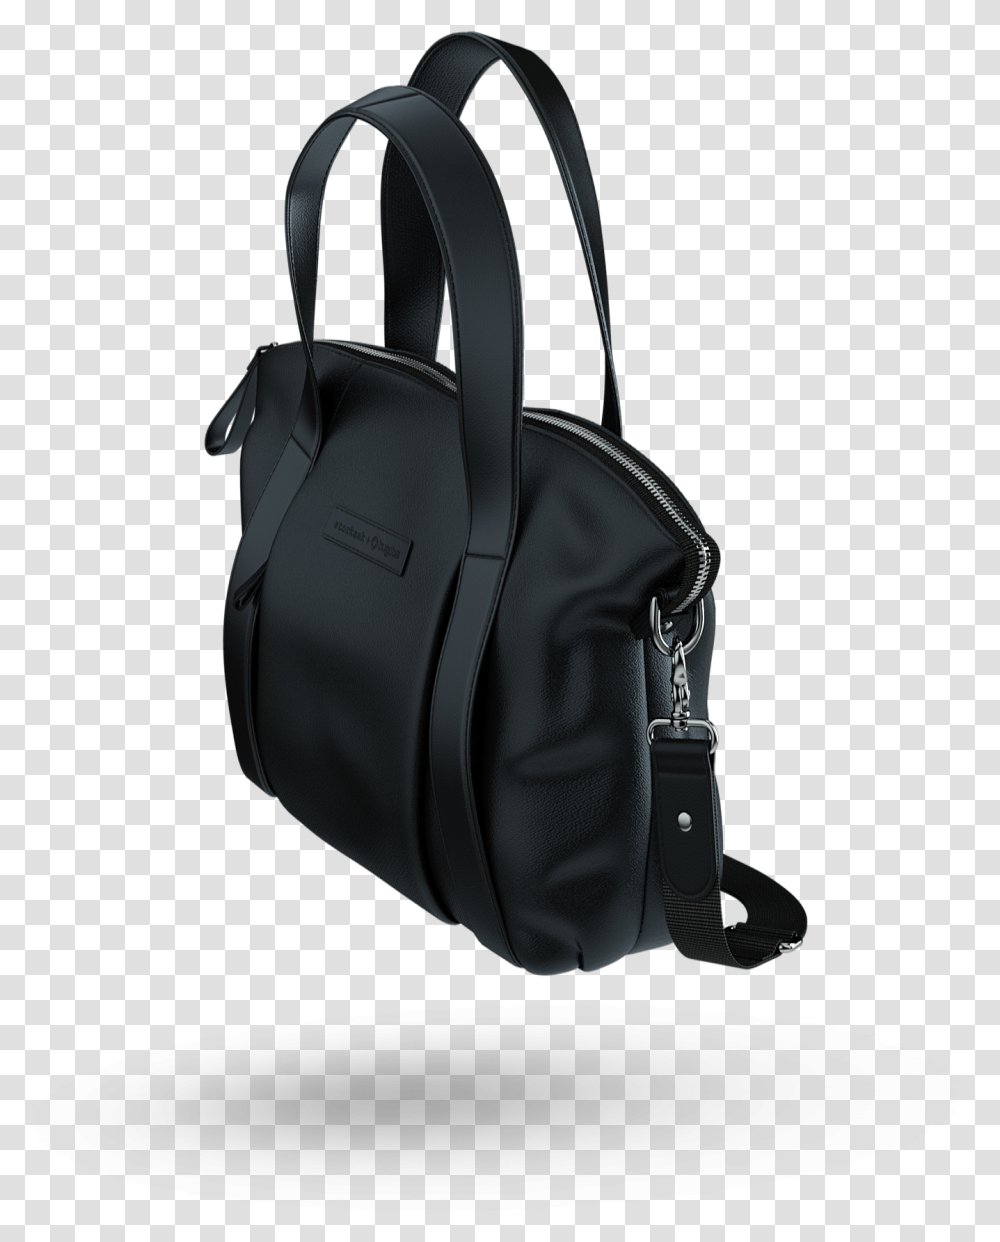 Storksak Bugaboo Leather Bag Black Duffel Bag, Backpack, Accessories, Accessory, Handbag Transparent Png